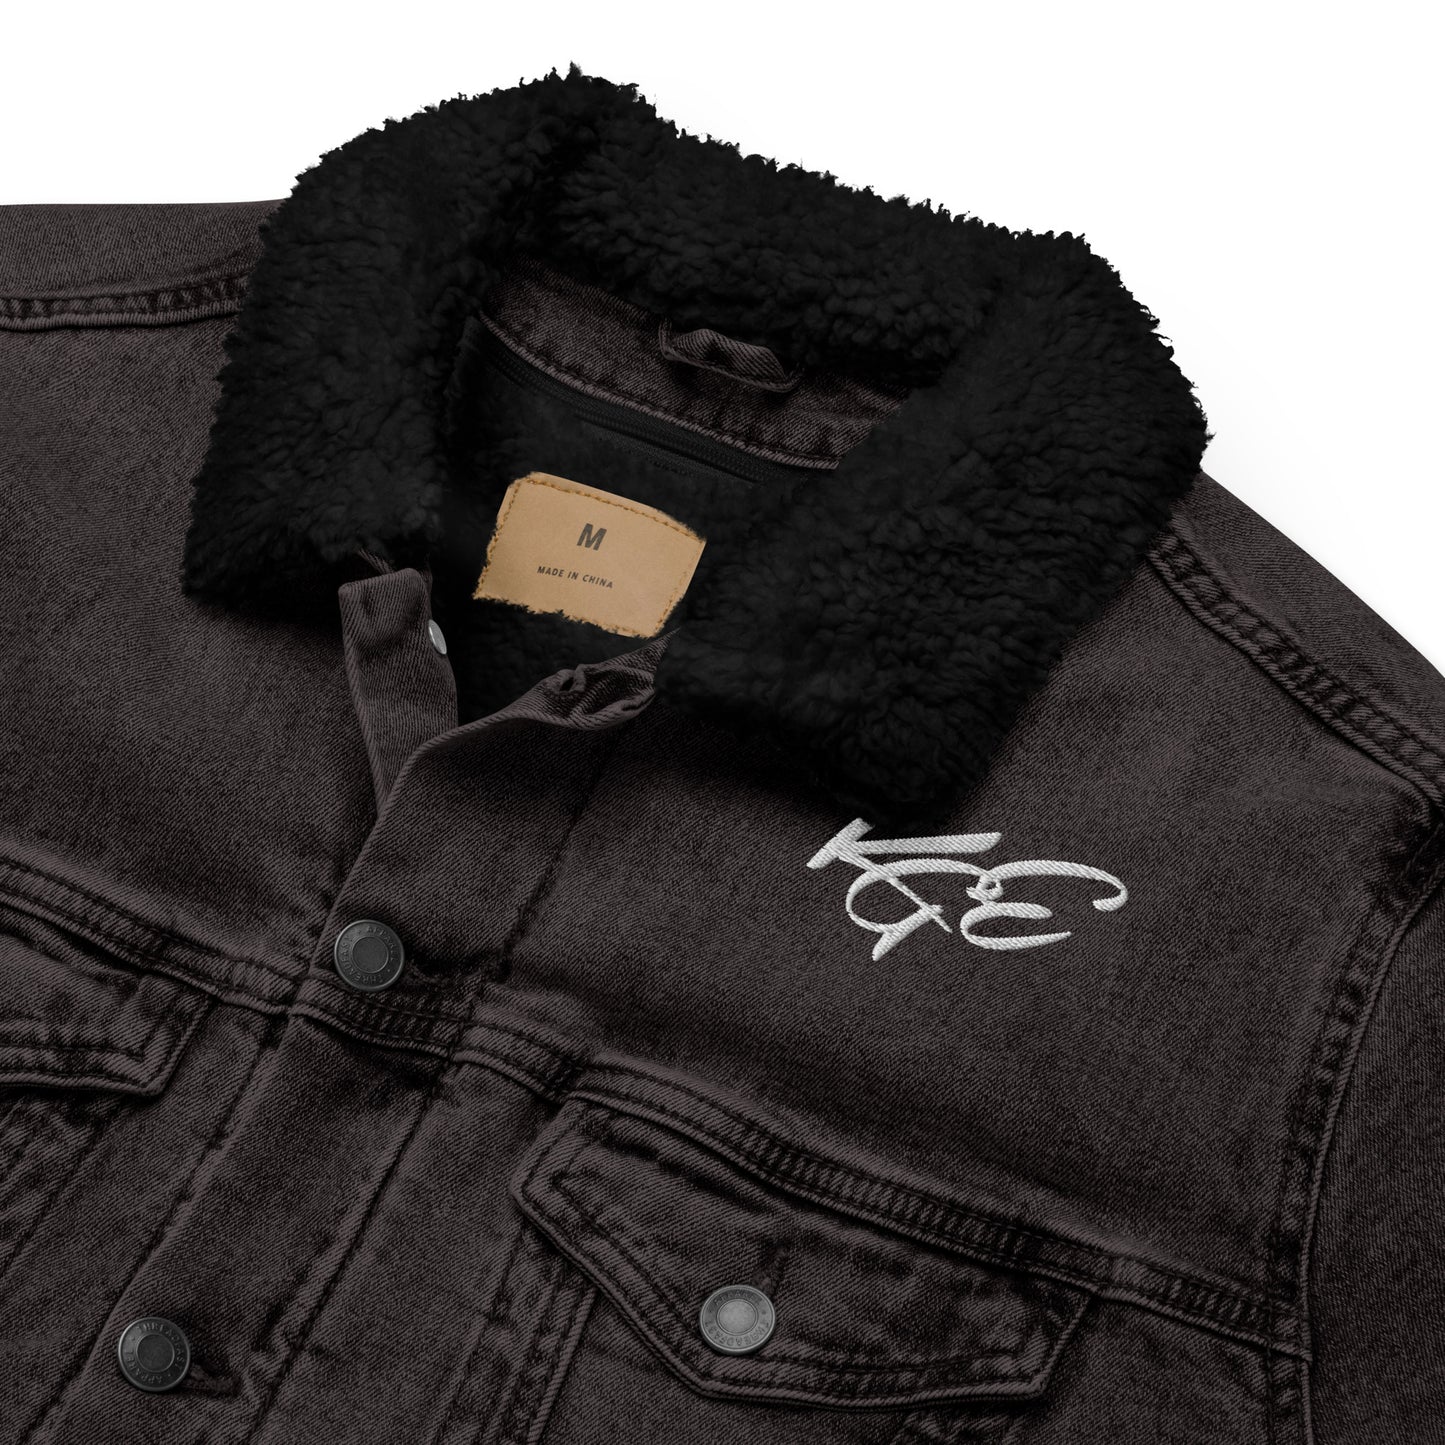 KGE Unlid - Embroidery denim eco sherpa jacket